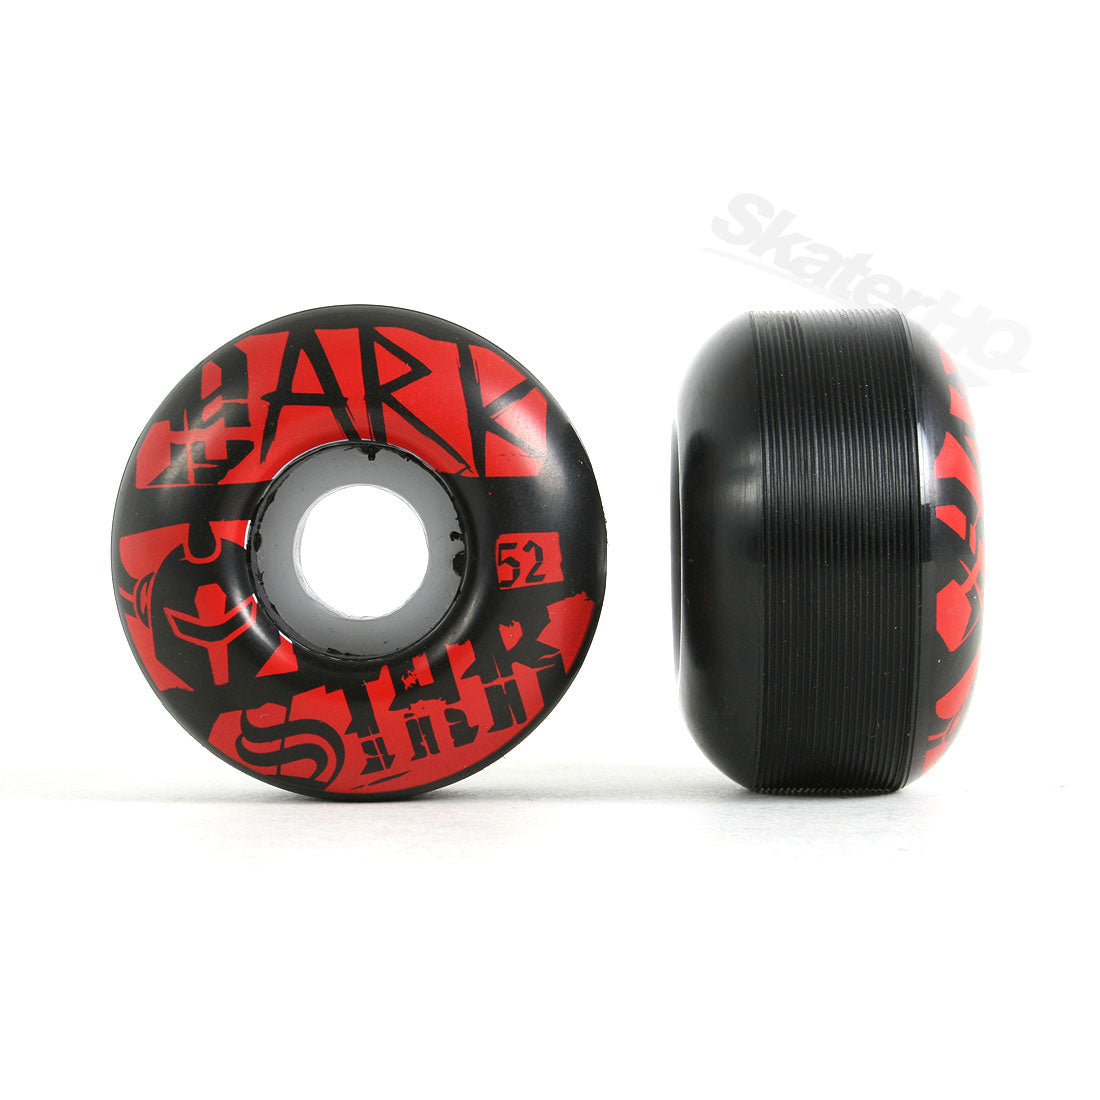 Darkstar Wheels 52mm/100a - Blk/Red Skateboard Wheels